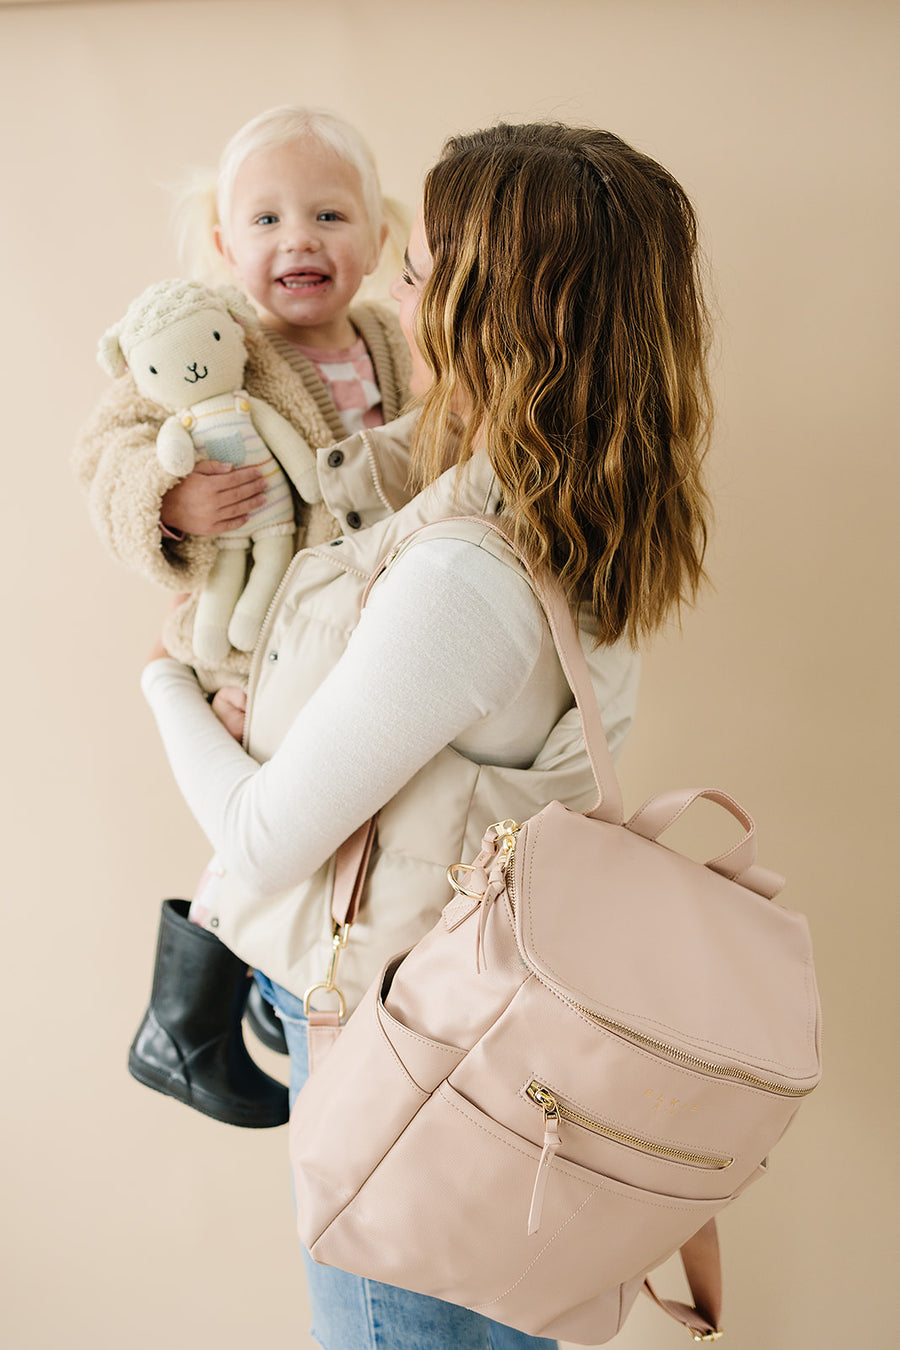 Mom holding toddler. mom is wearing Blush capri backpack